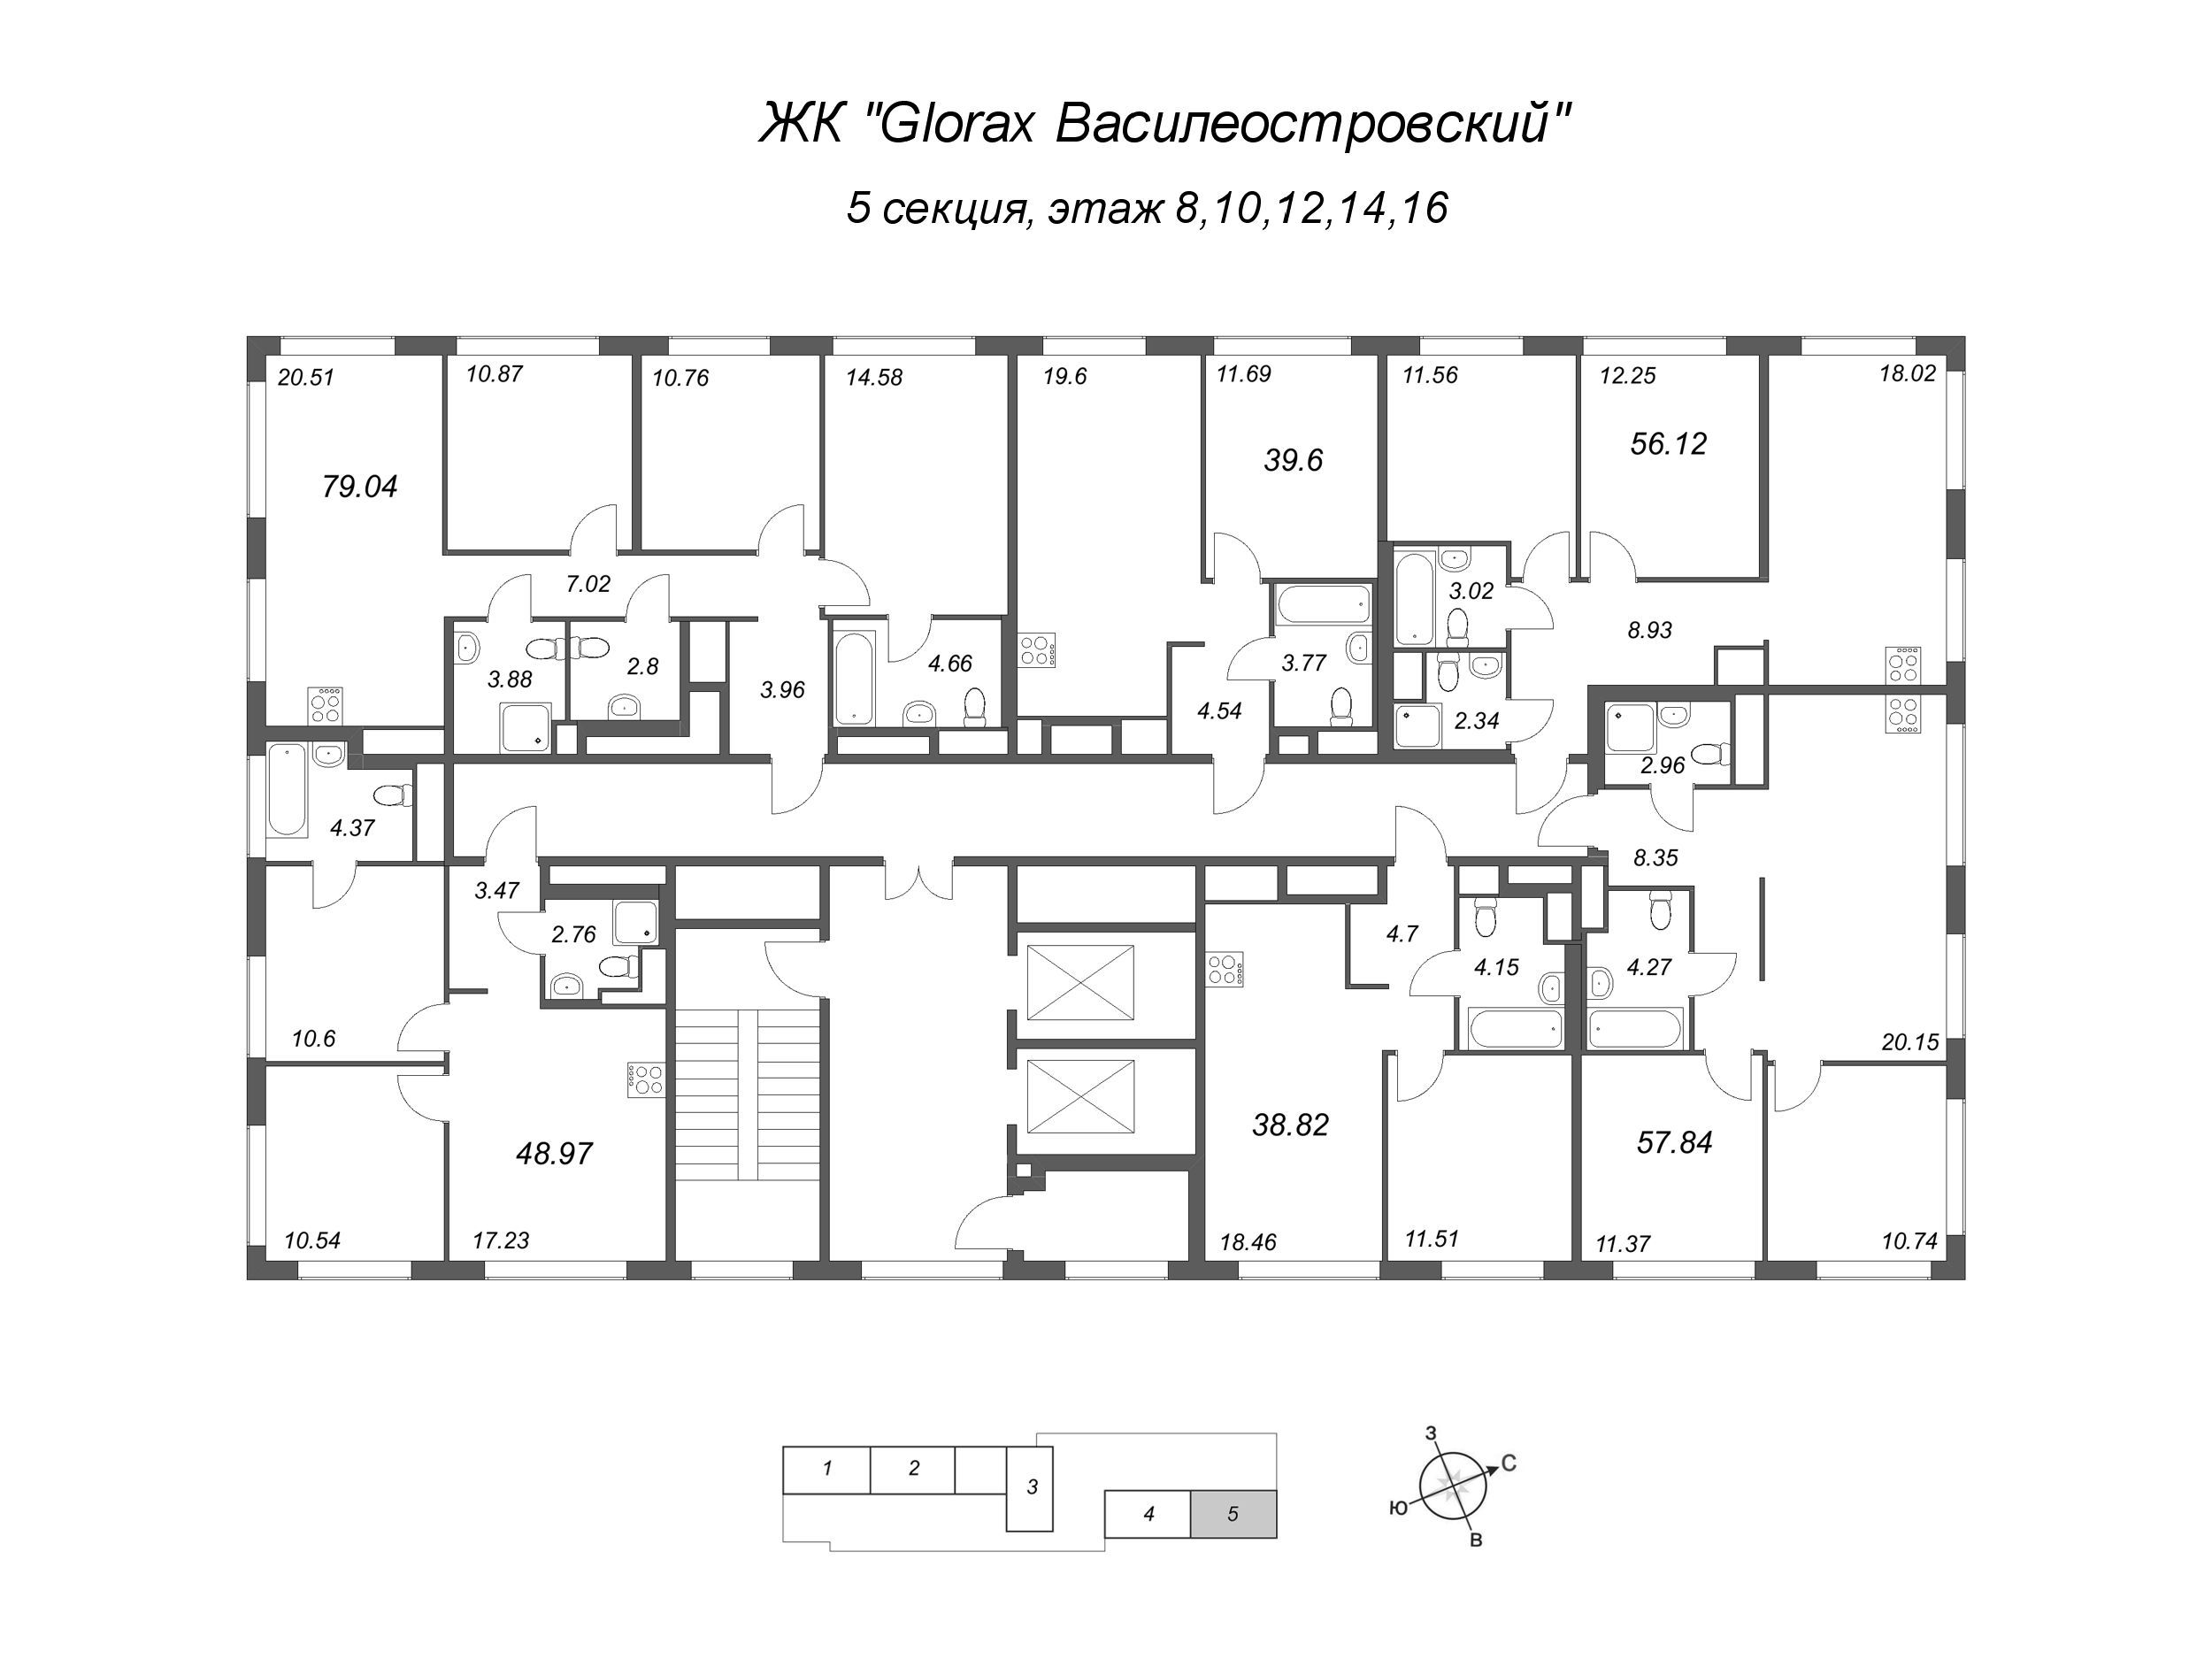 4-комнатная (Евро) квартира, 79.04 м² - планировка этажа